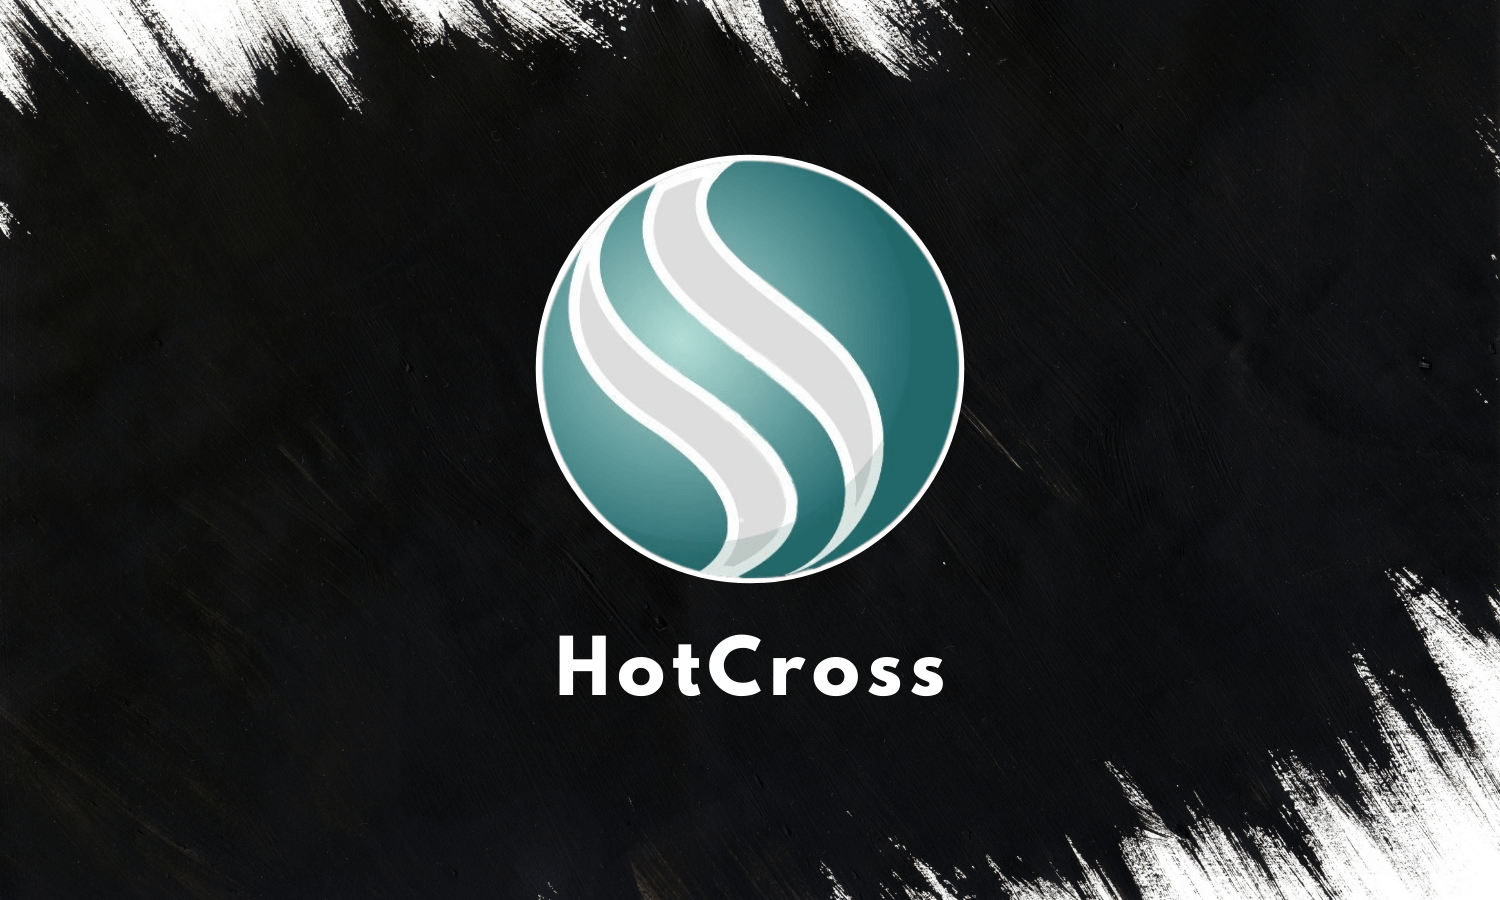 HotCross